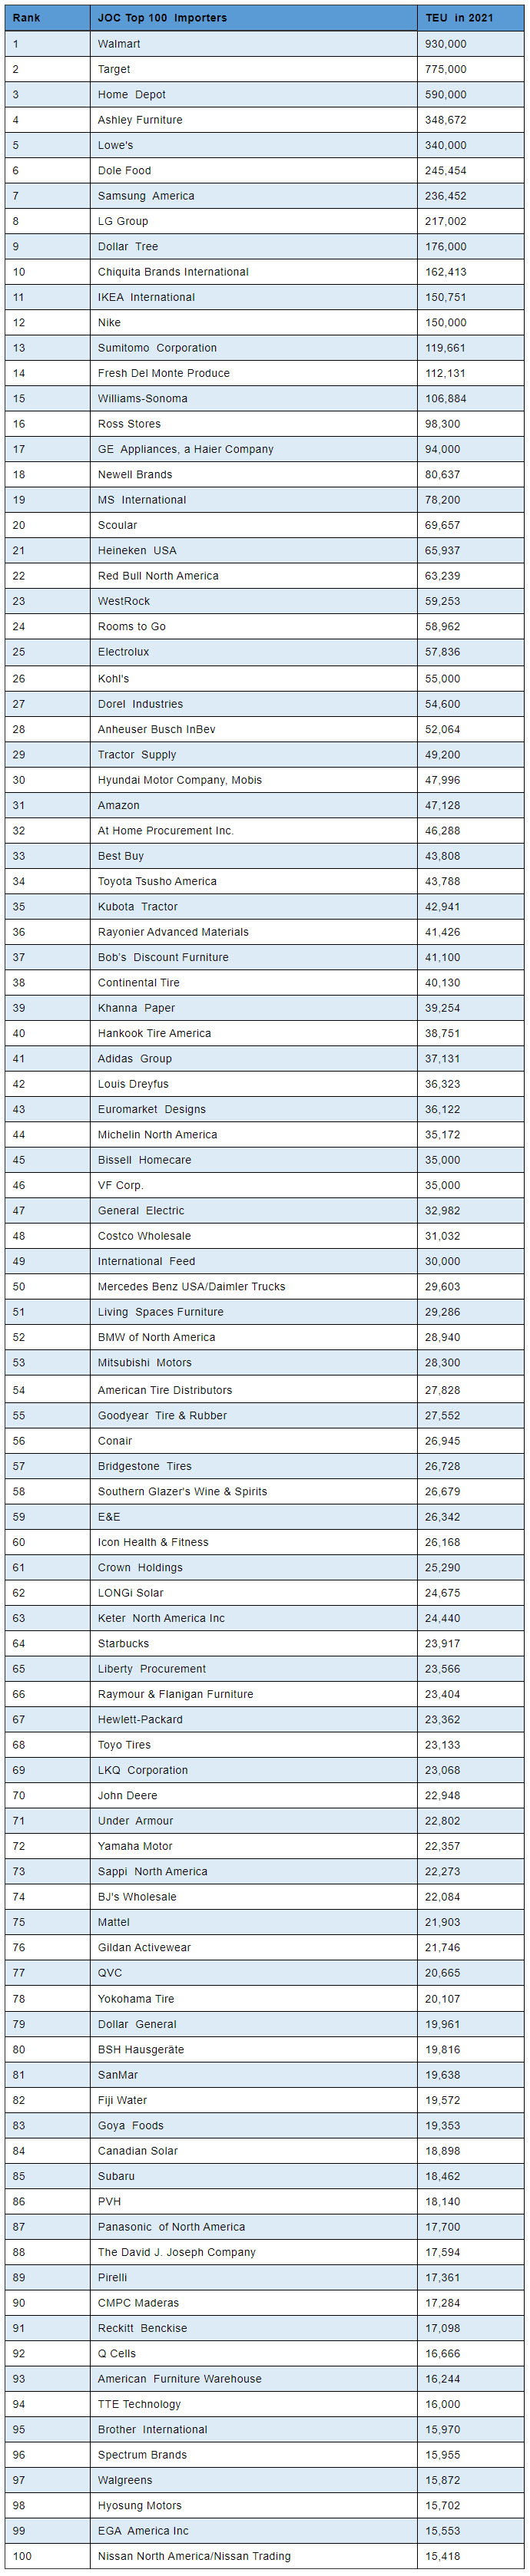 JOC Top 100 US Importer Rankings 2021 STU